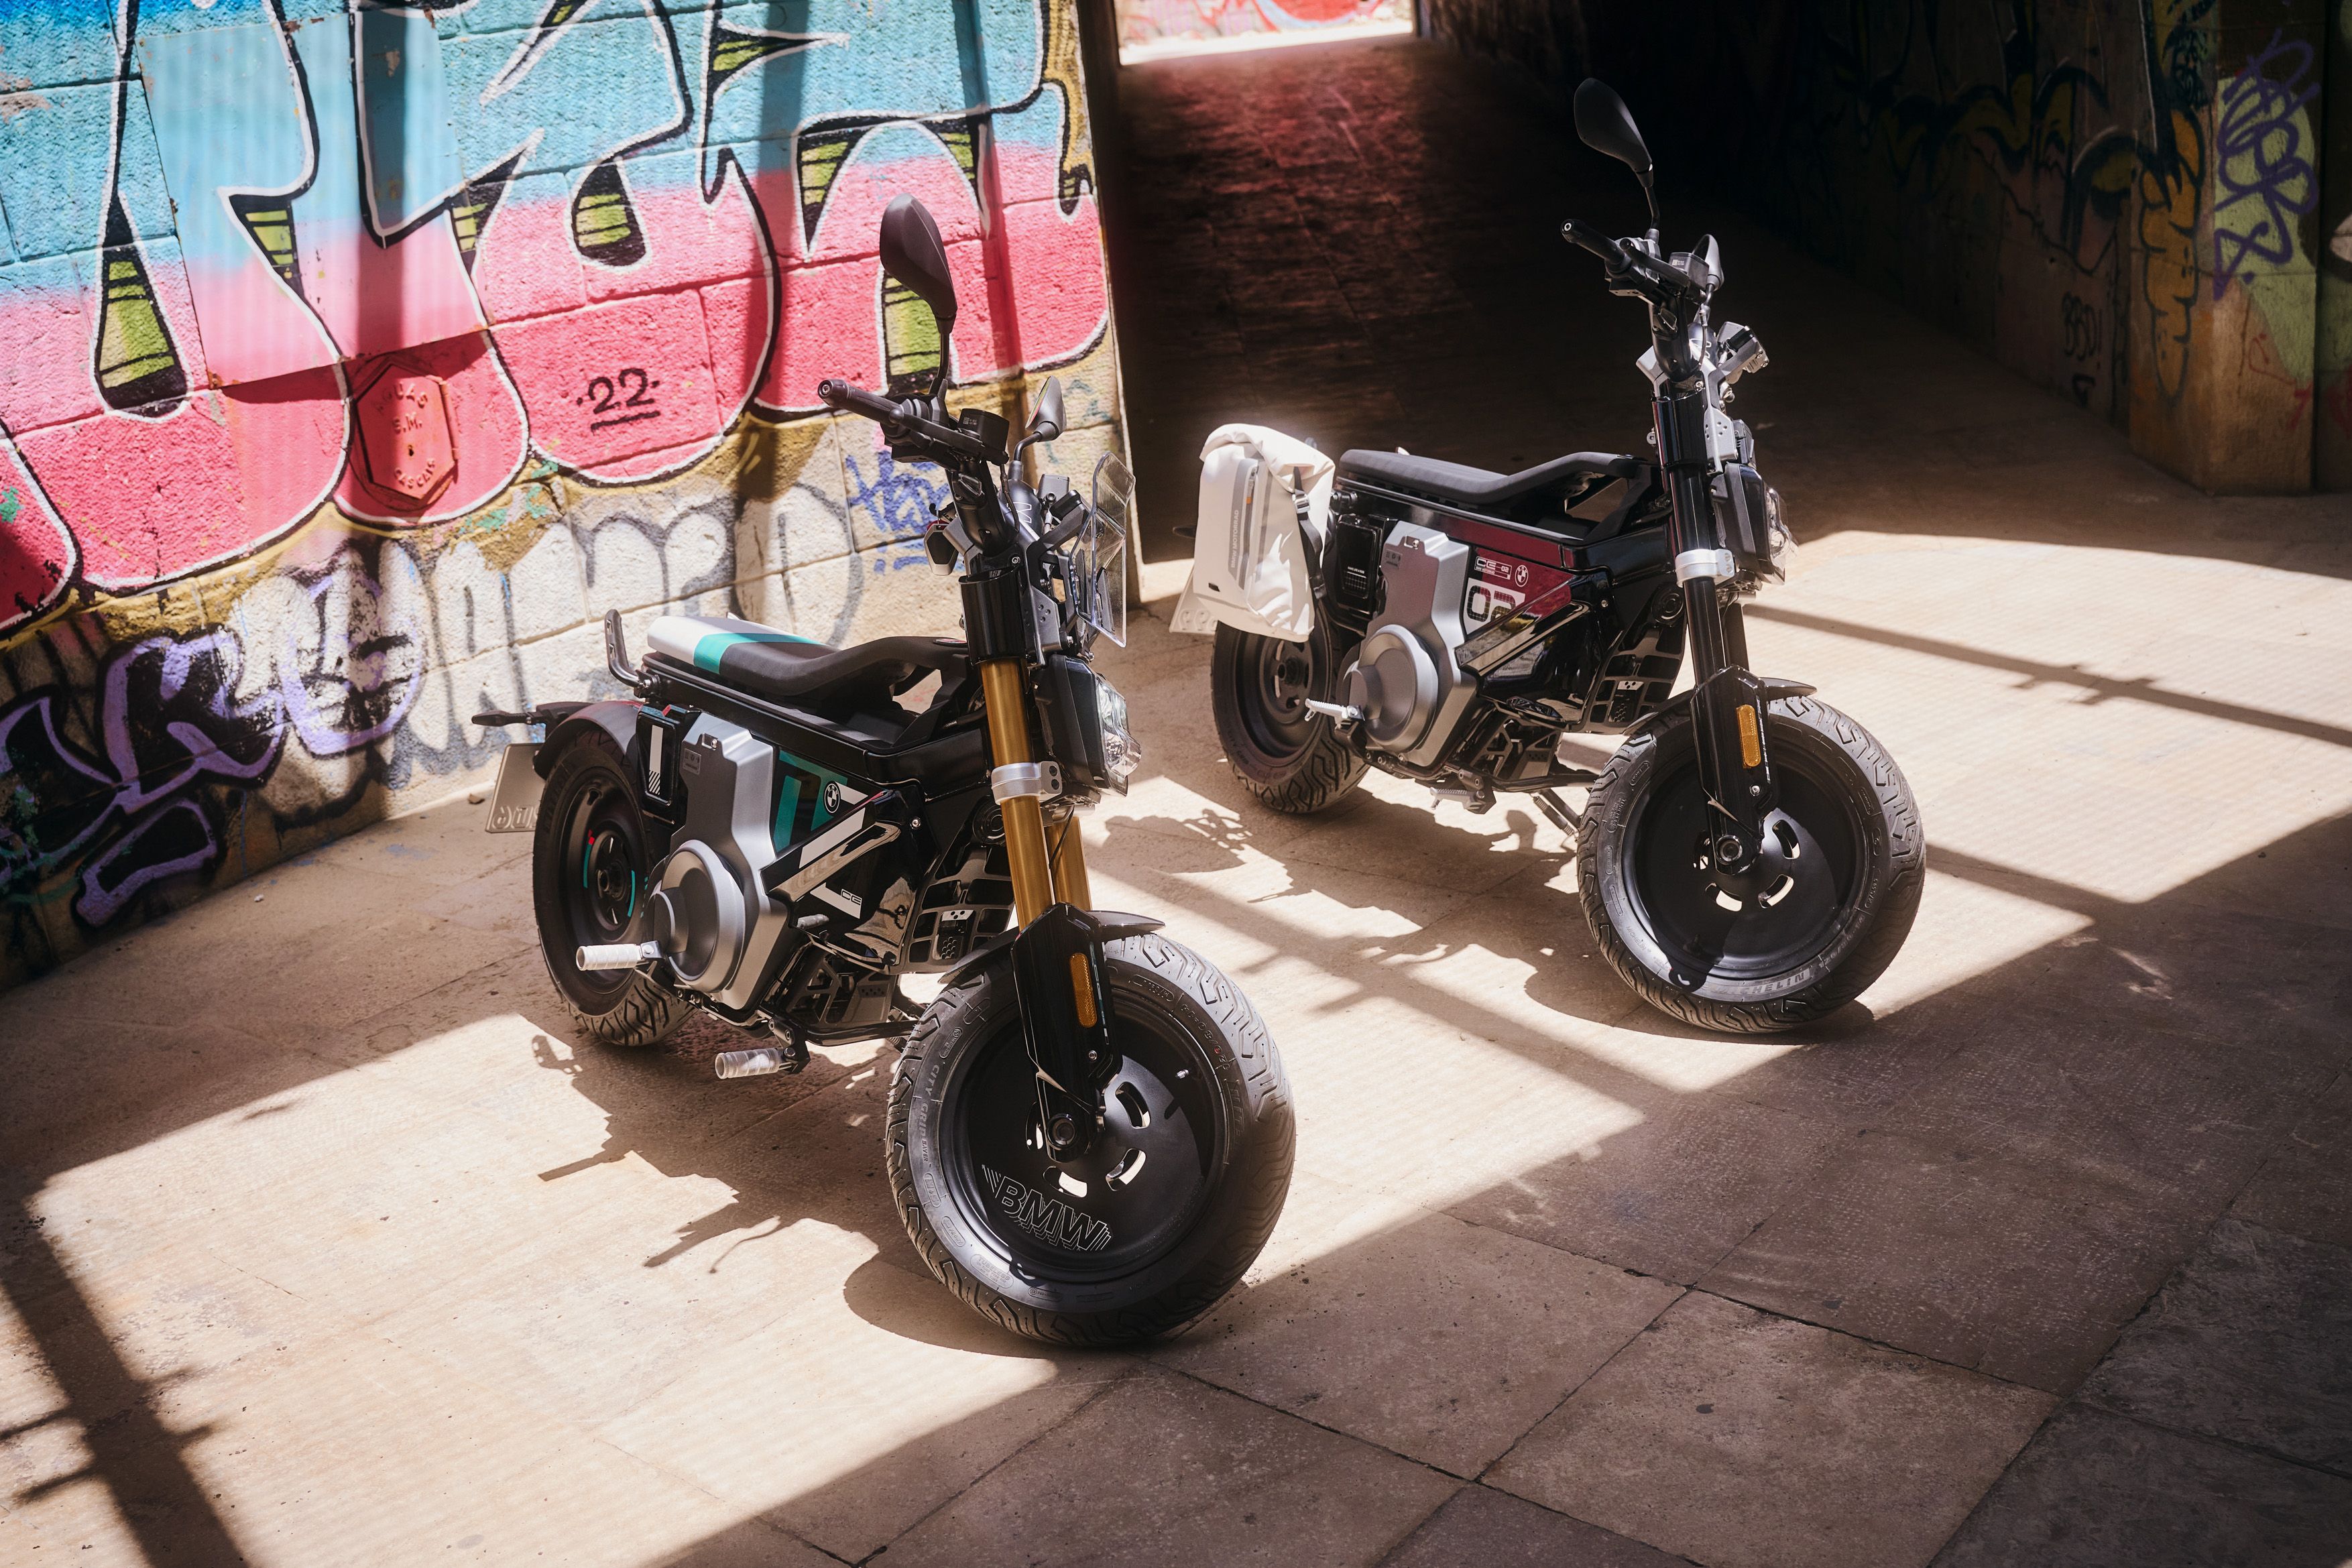 motos electricos for Better Mobility 